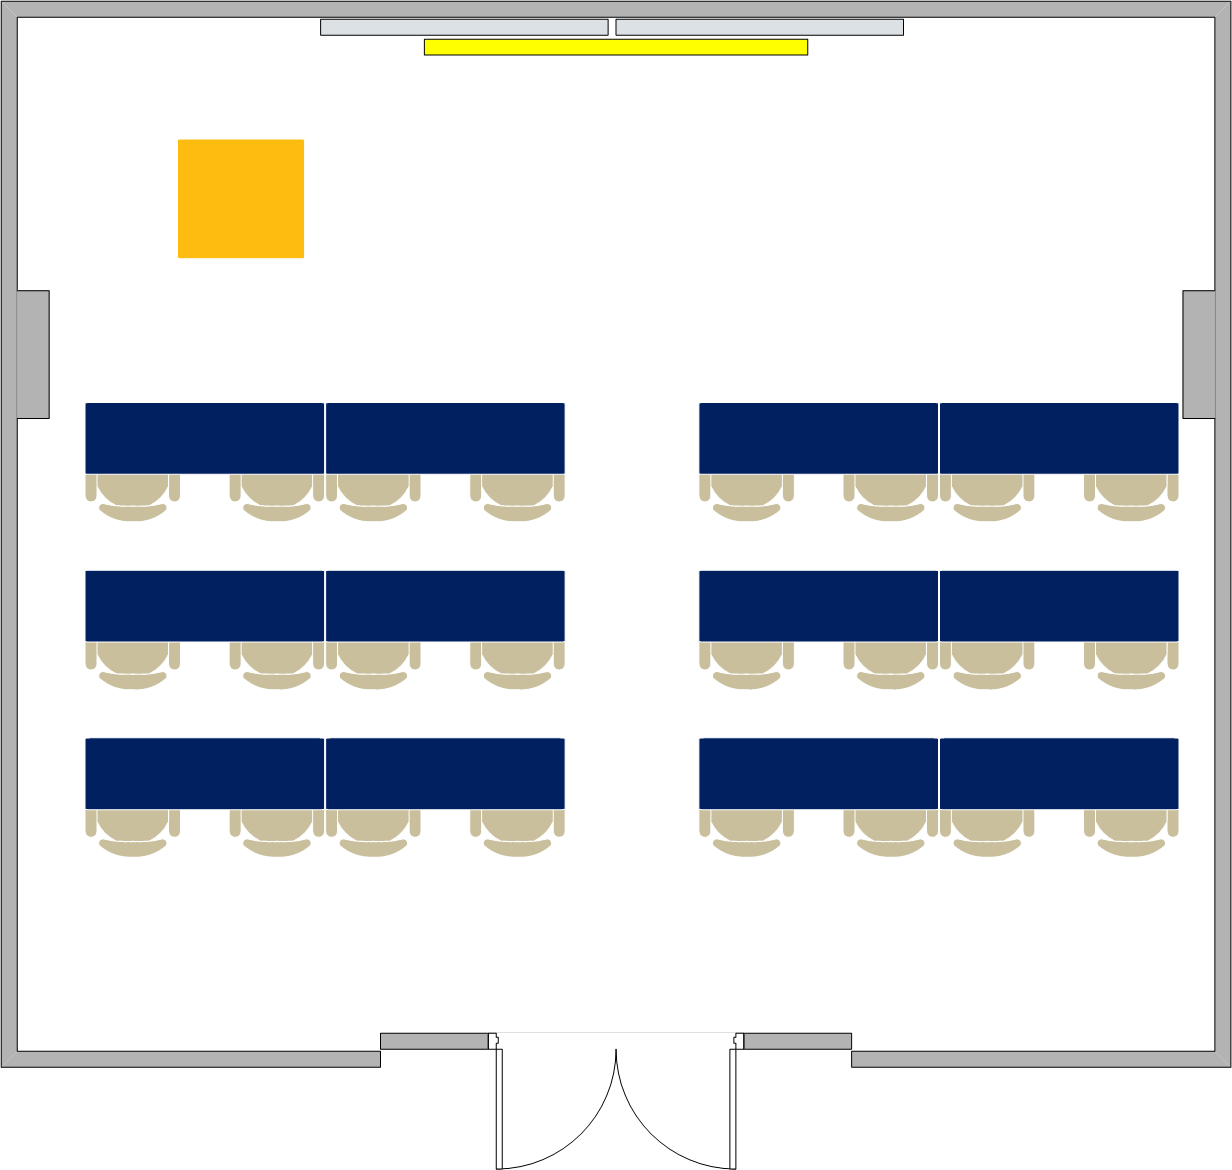 Ellison Hall - 4824 Seating Chart